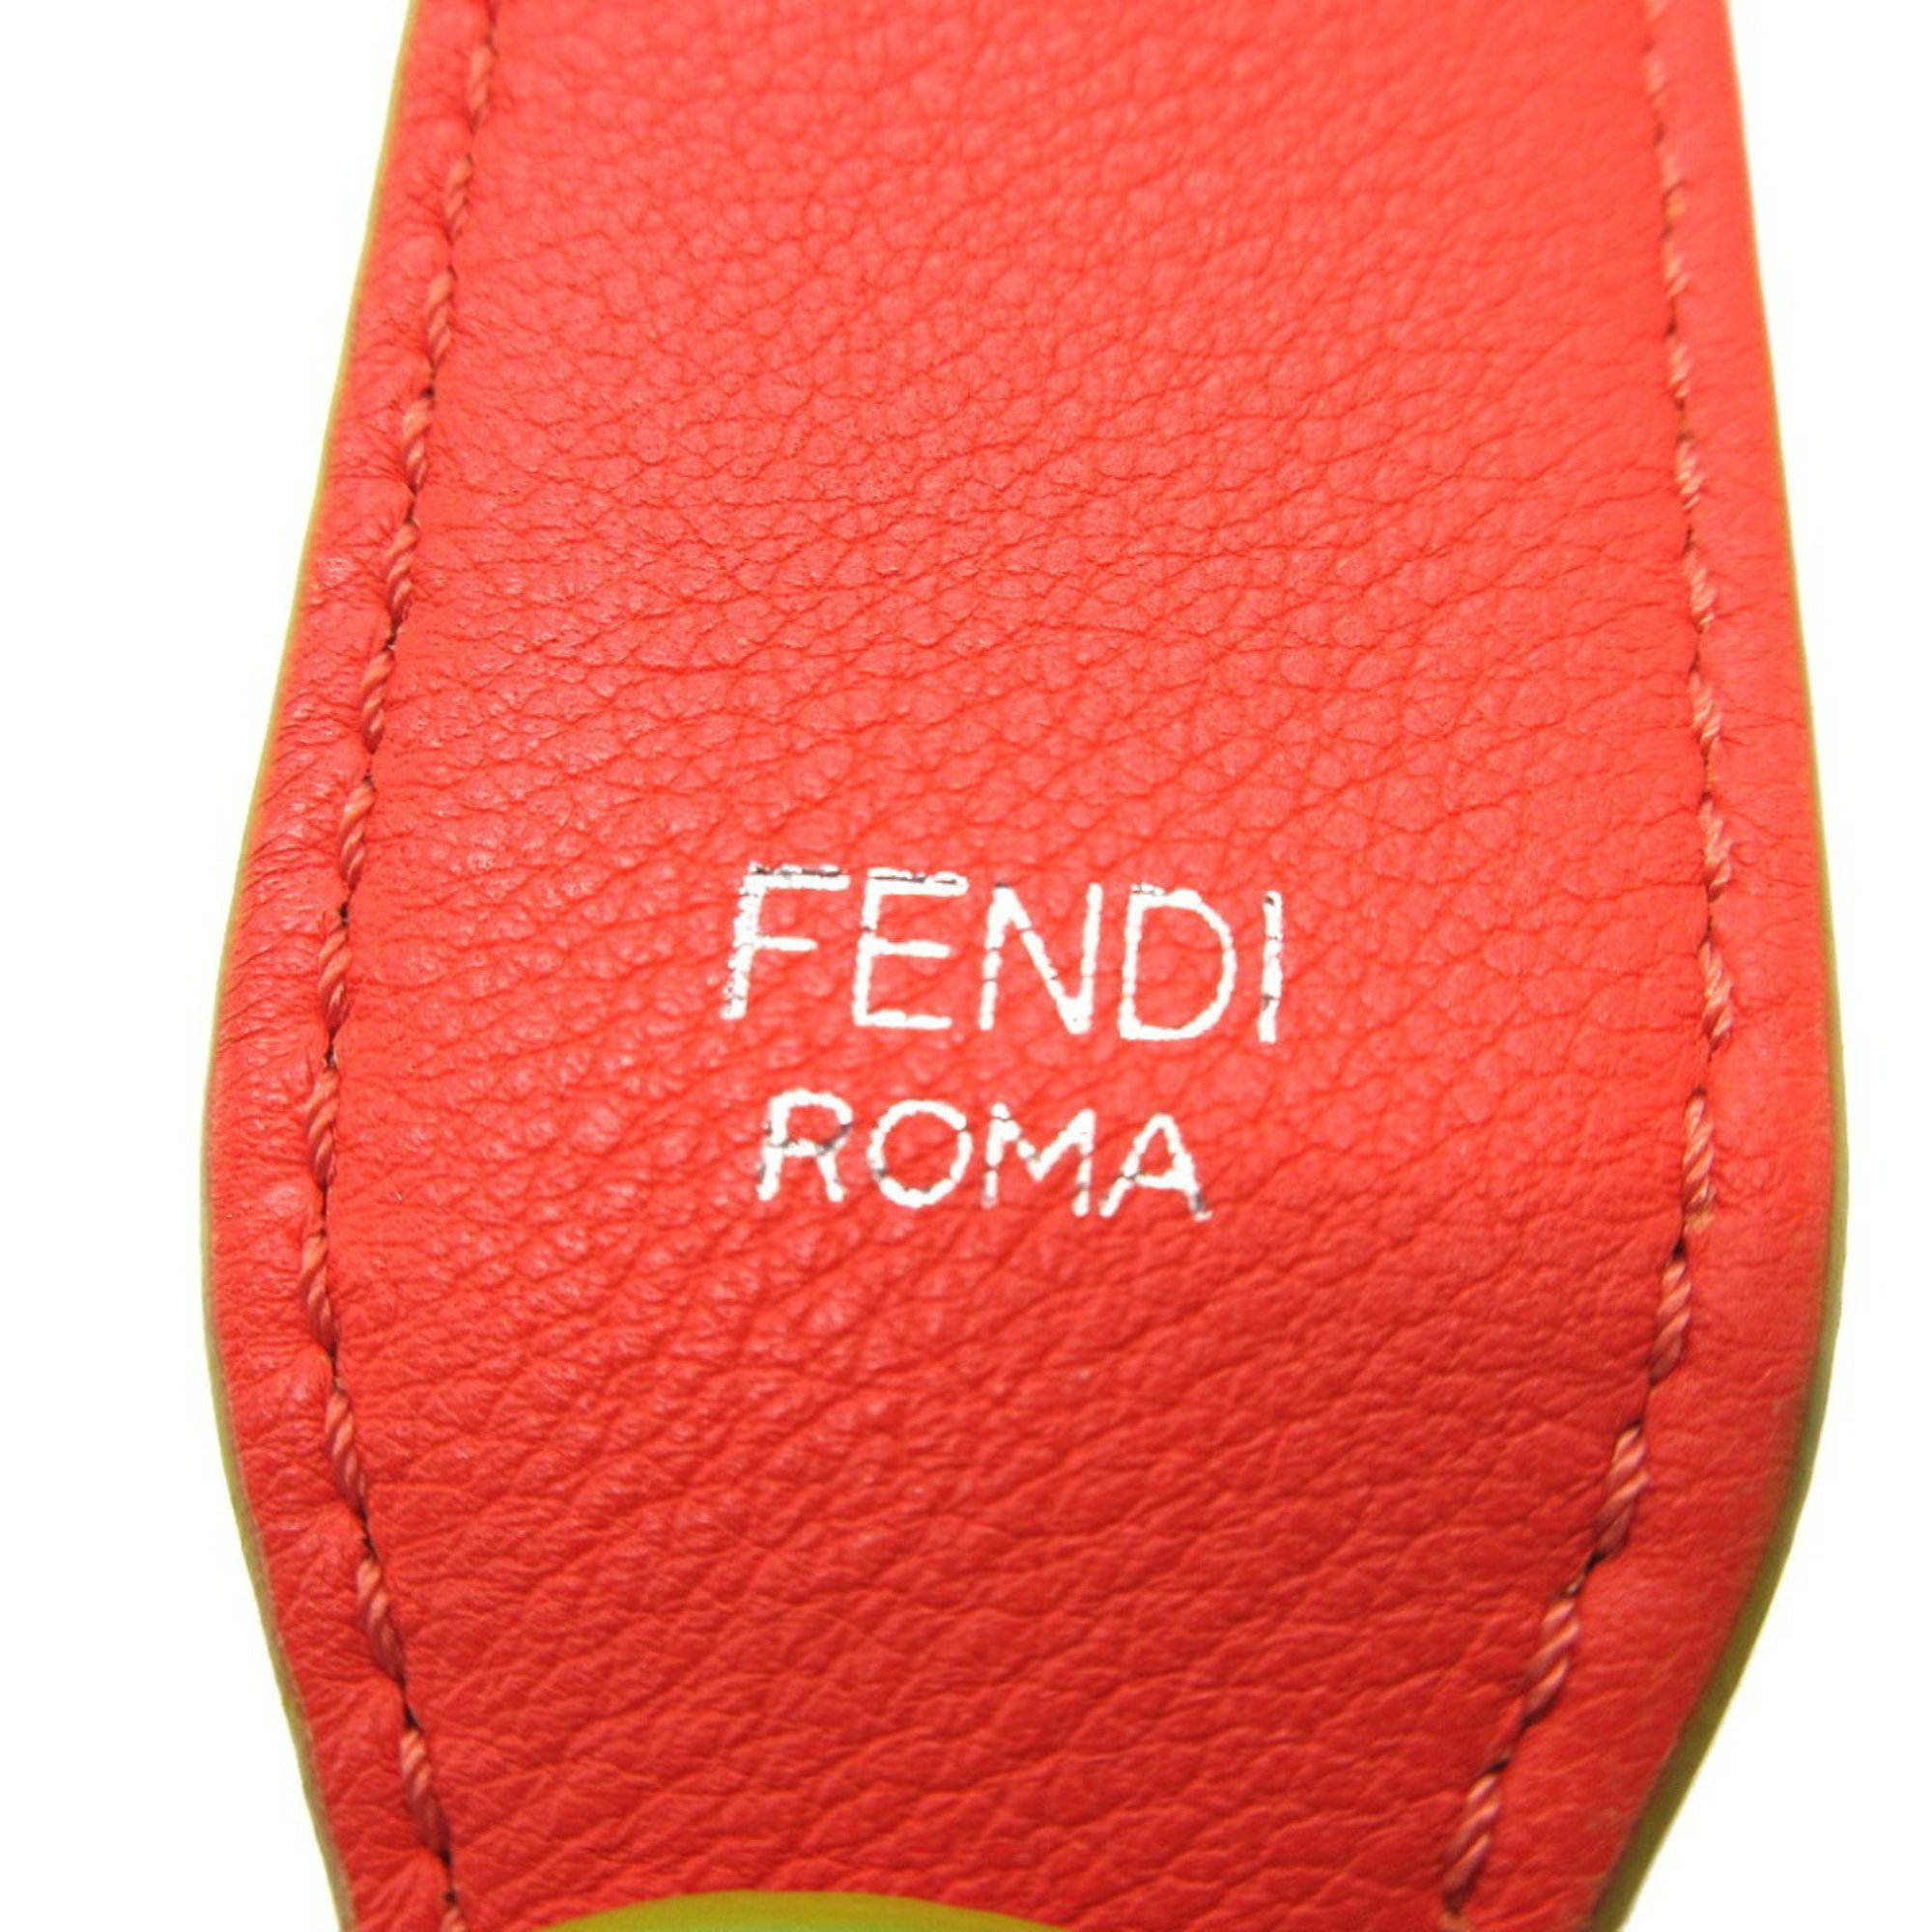 Fendi Strap You Leather Light Blue Orange Shoulder 0213FENDI 6A0213IZZ5